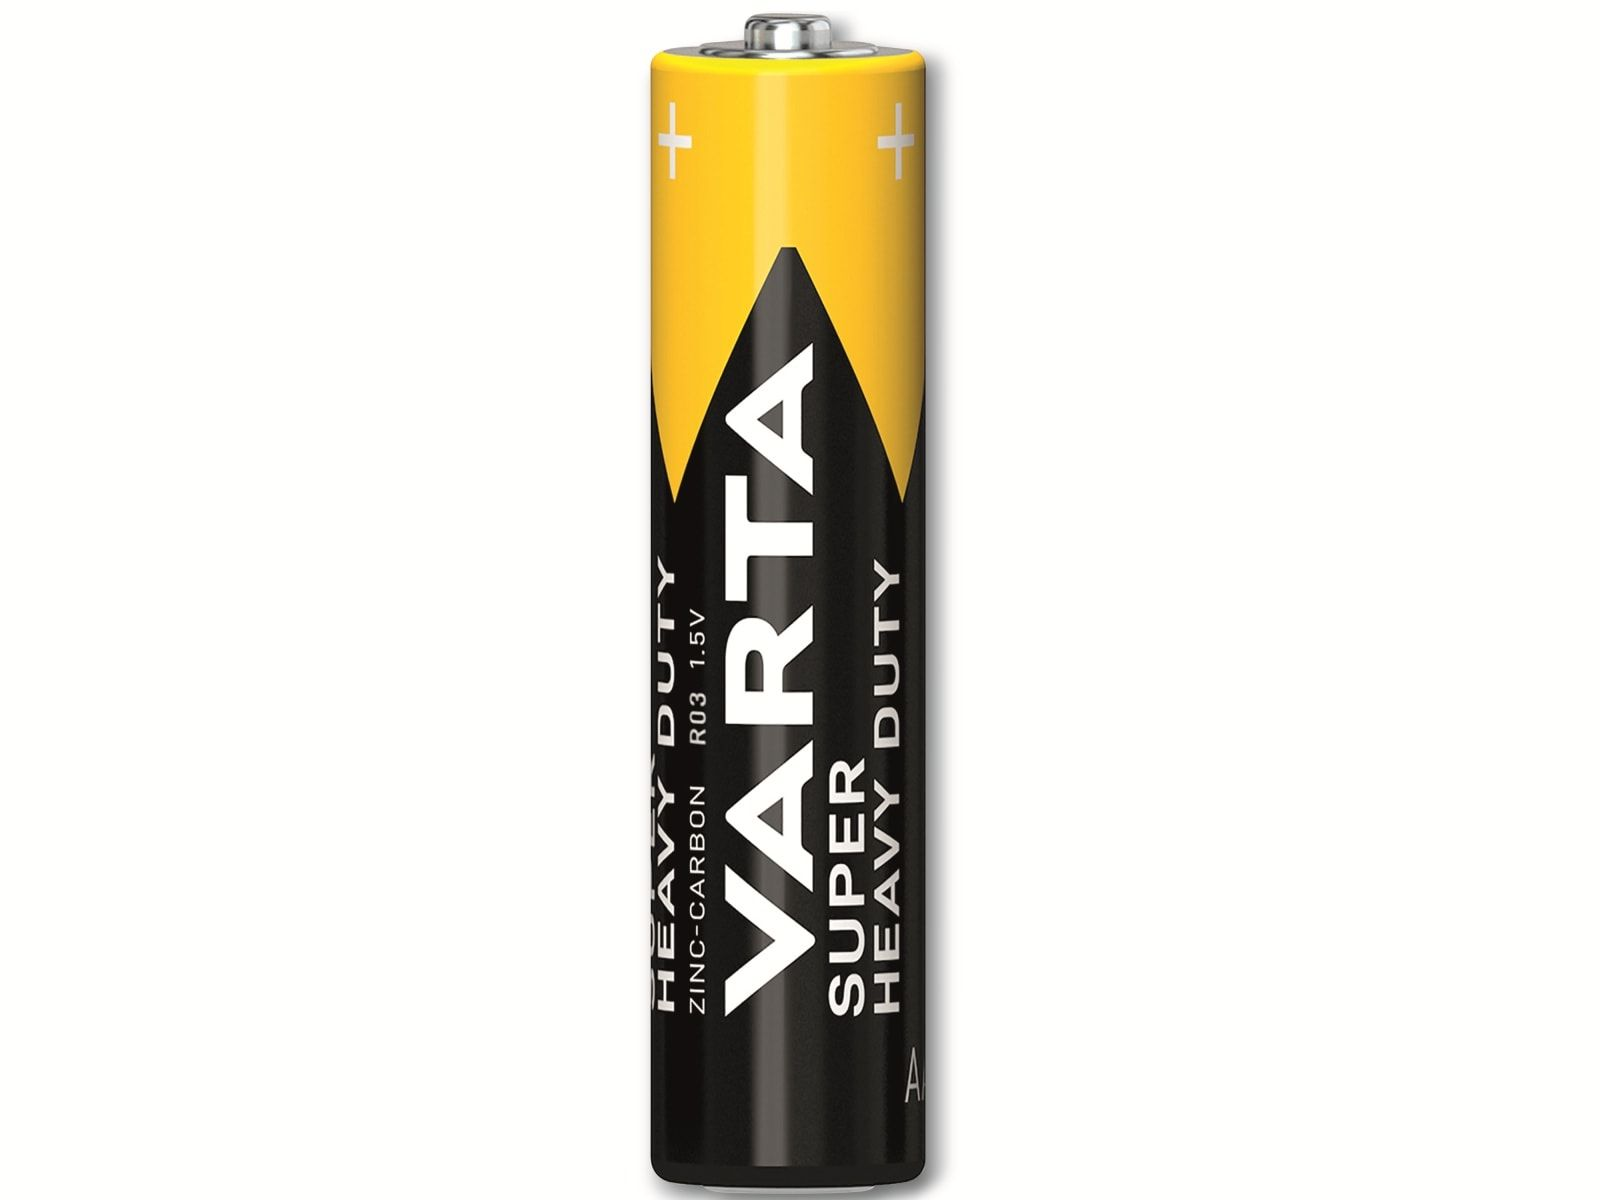 Superlife, Zink-Kohle, Stück VARTA R03, 1.5V, AAA, Batterie Batterie Micro, 4 Zink-Kohle